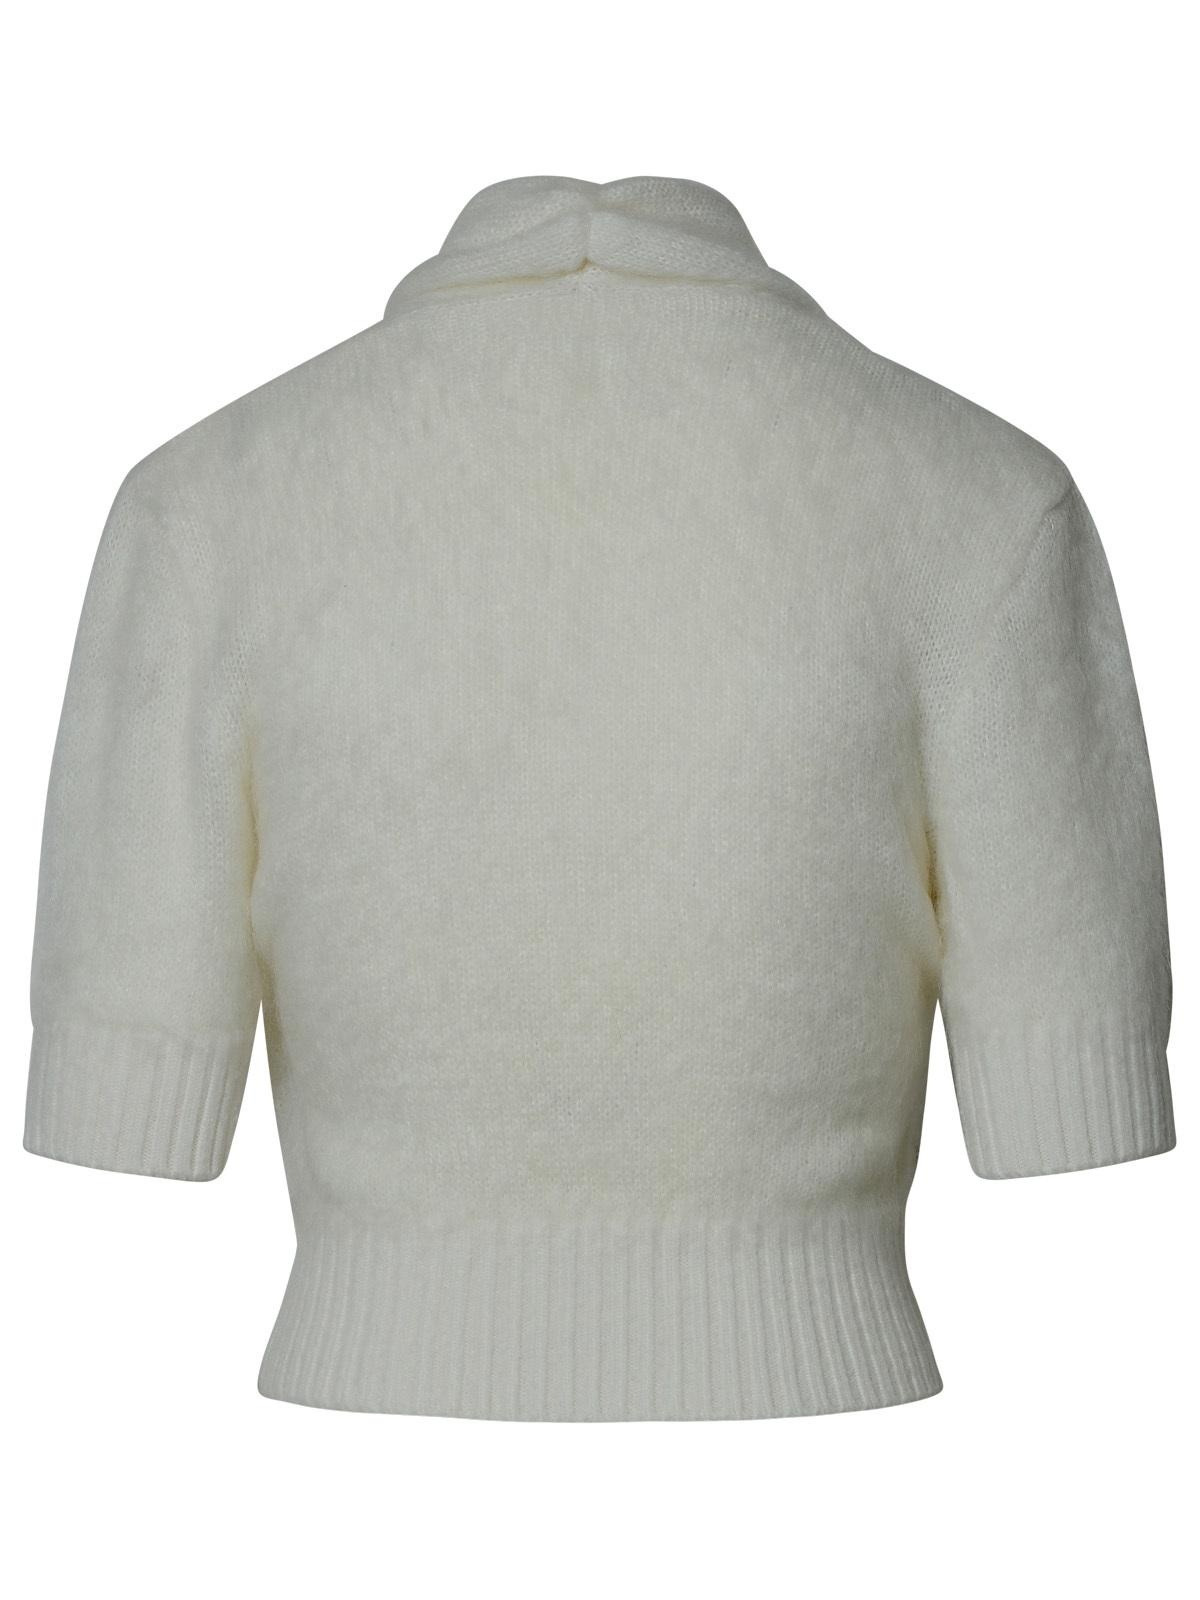 Balmain White Virgin Wool Blend Sweater - 3